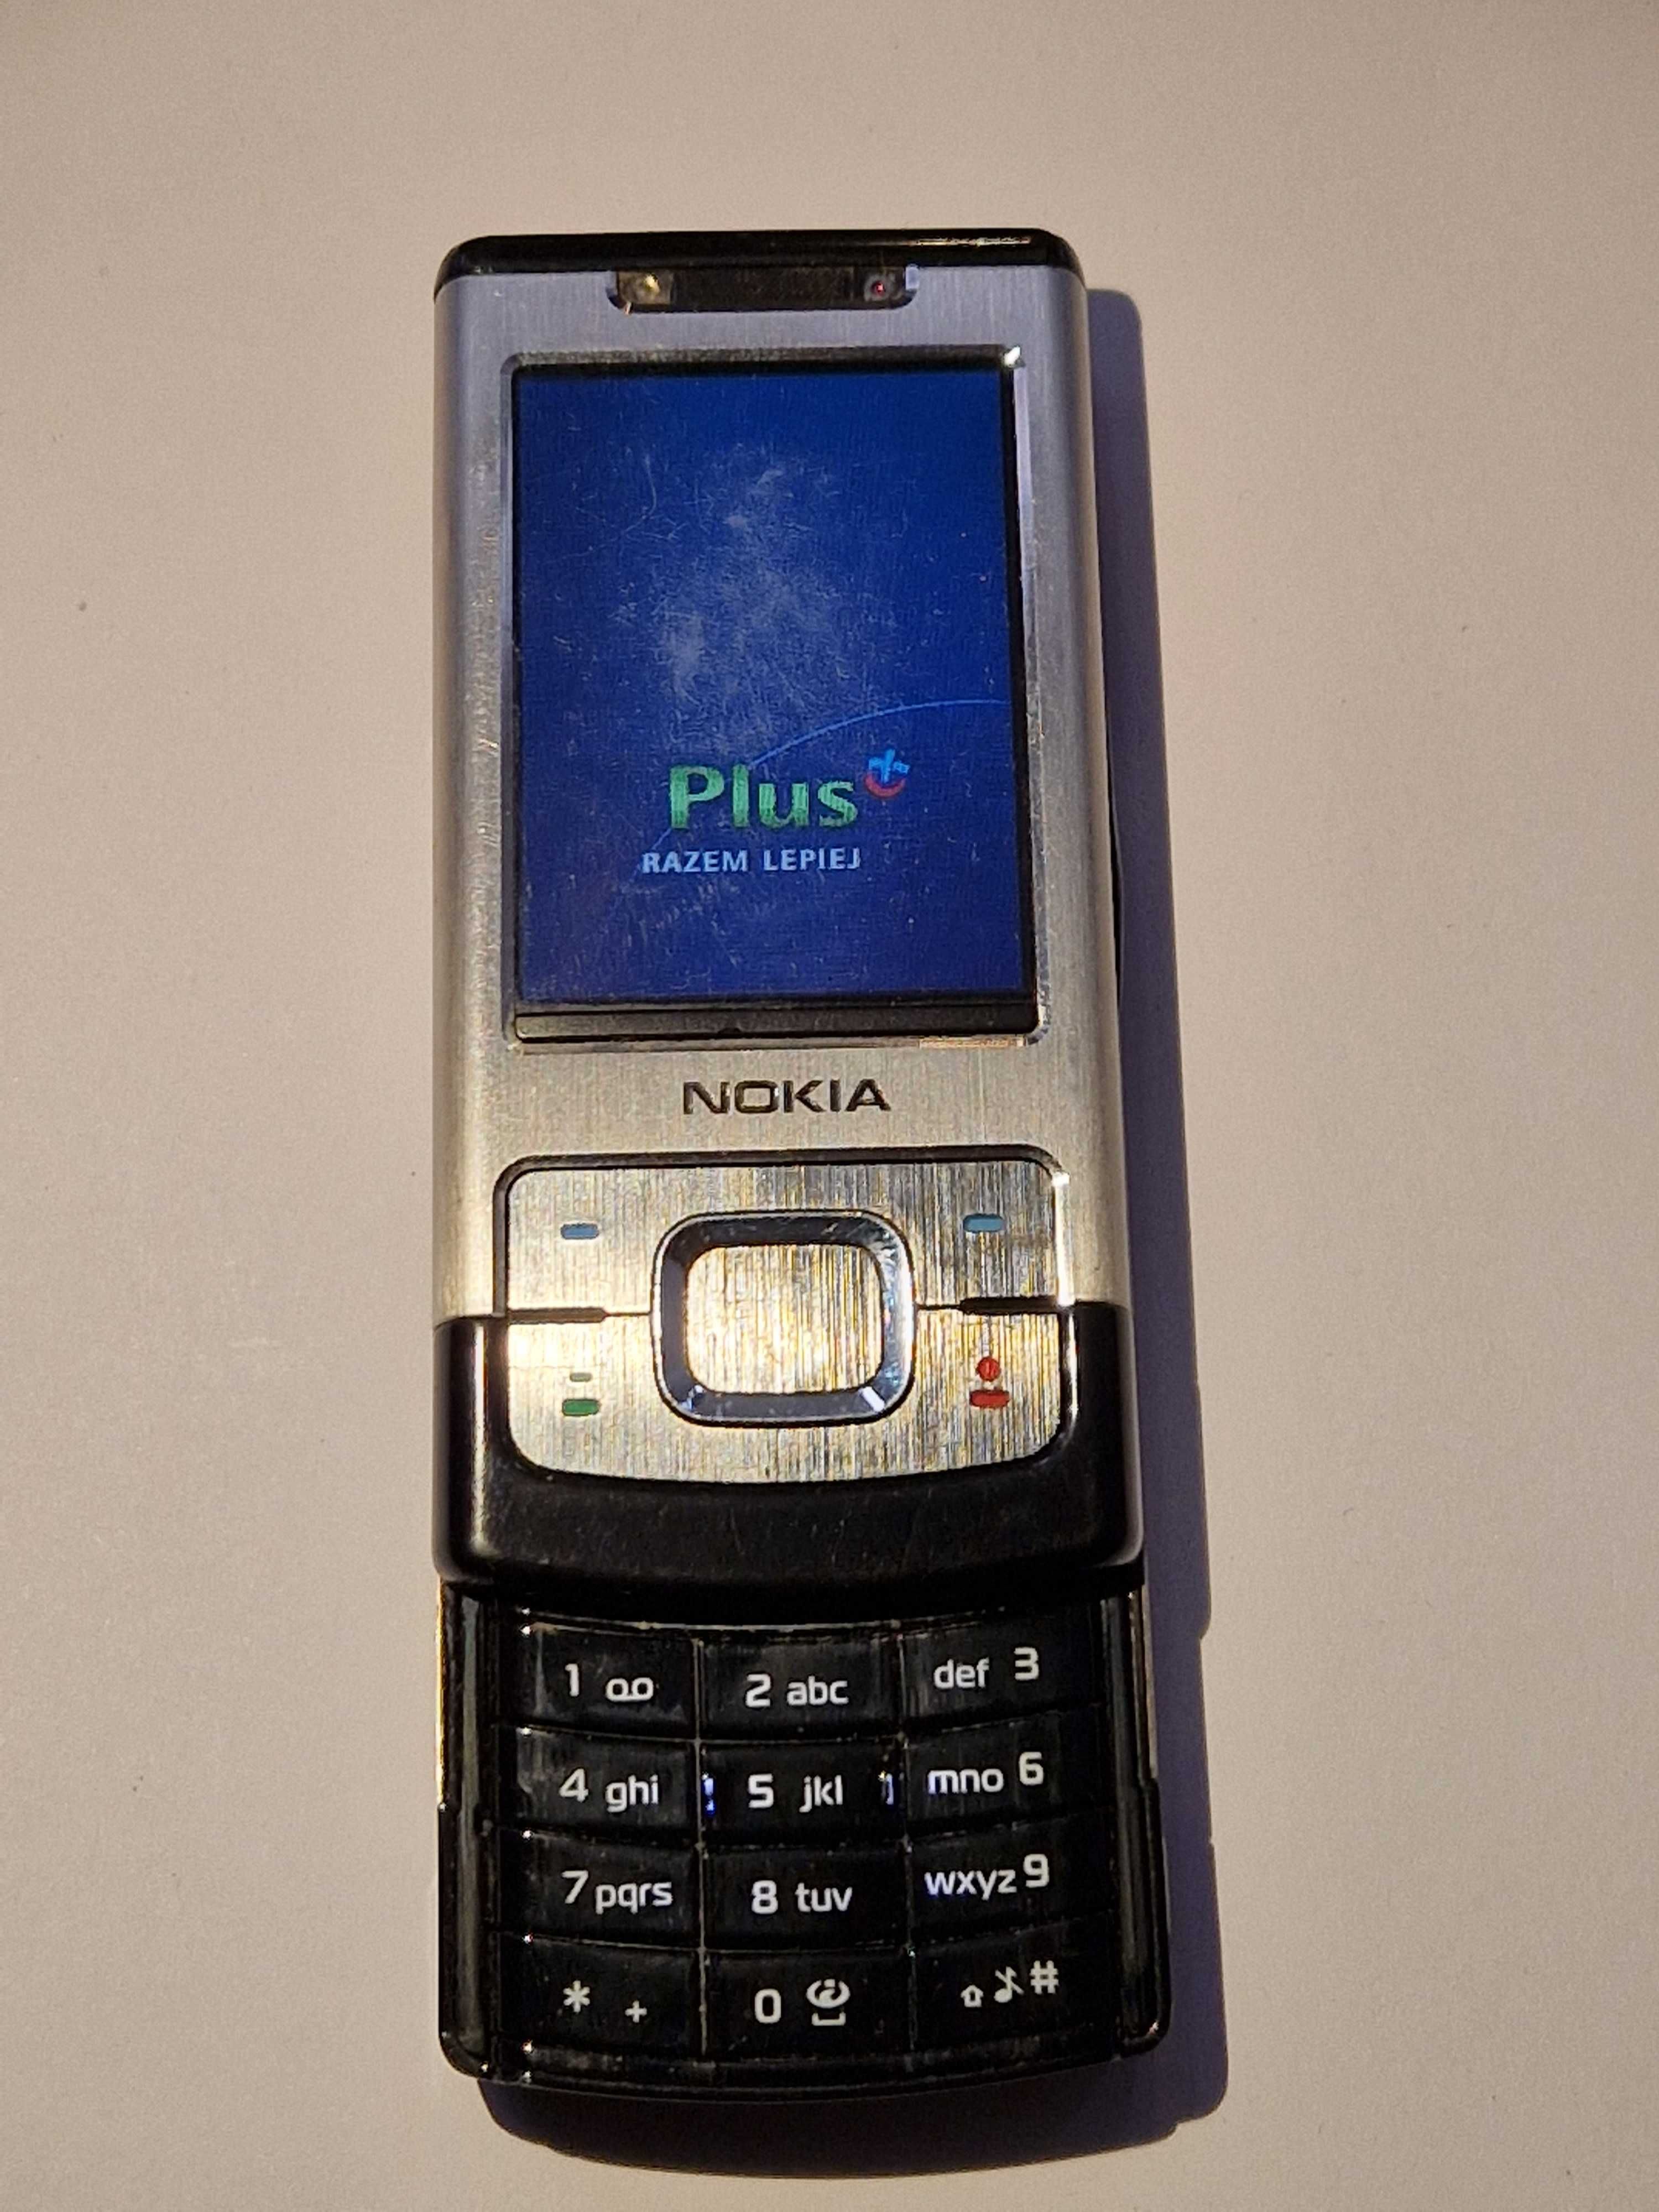 Telefon Nokia 6500s-1